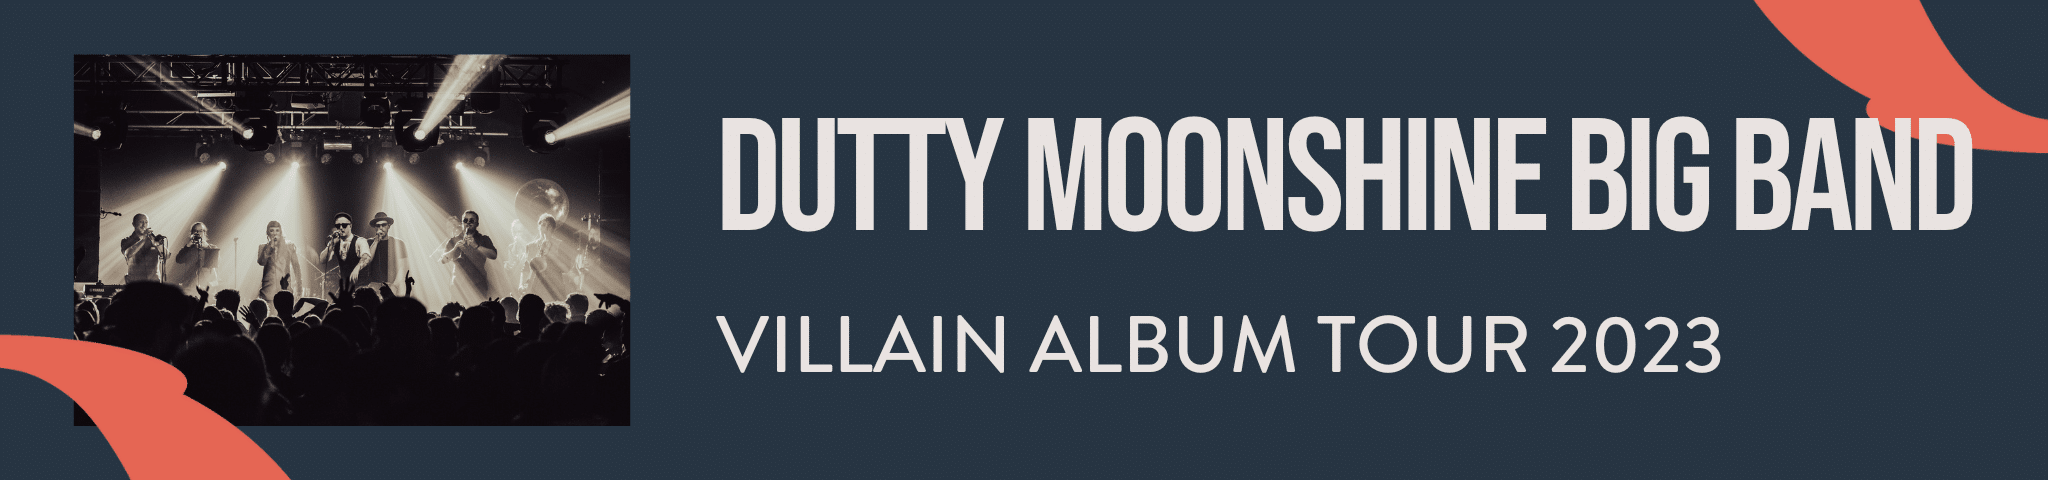 DUTTY MOONSHINE BIG BAND – VILLAIN TOUR 2023